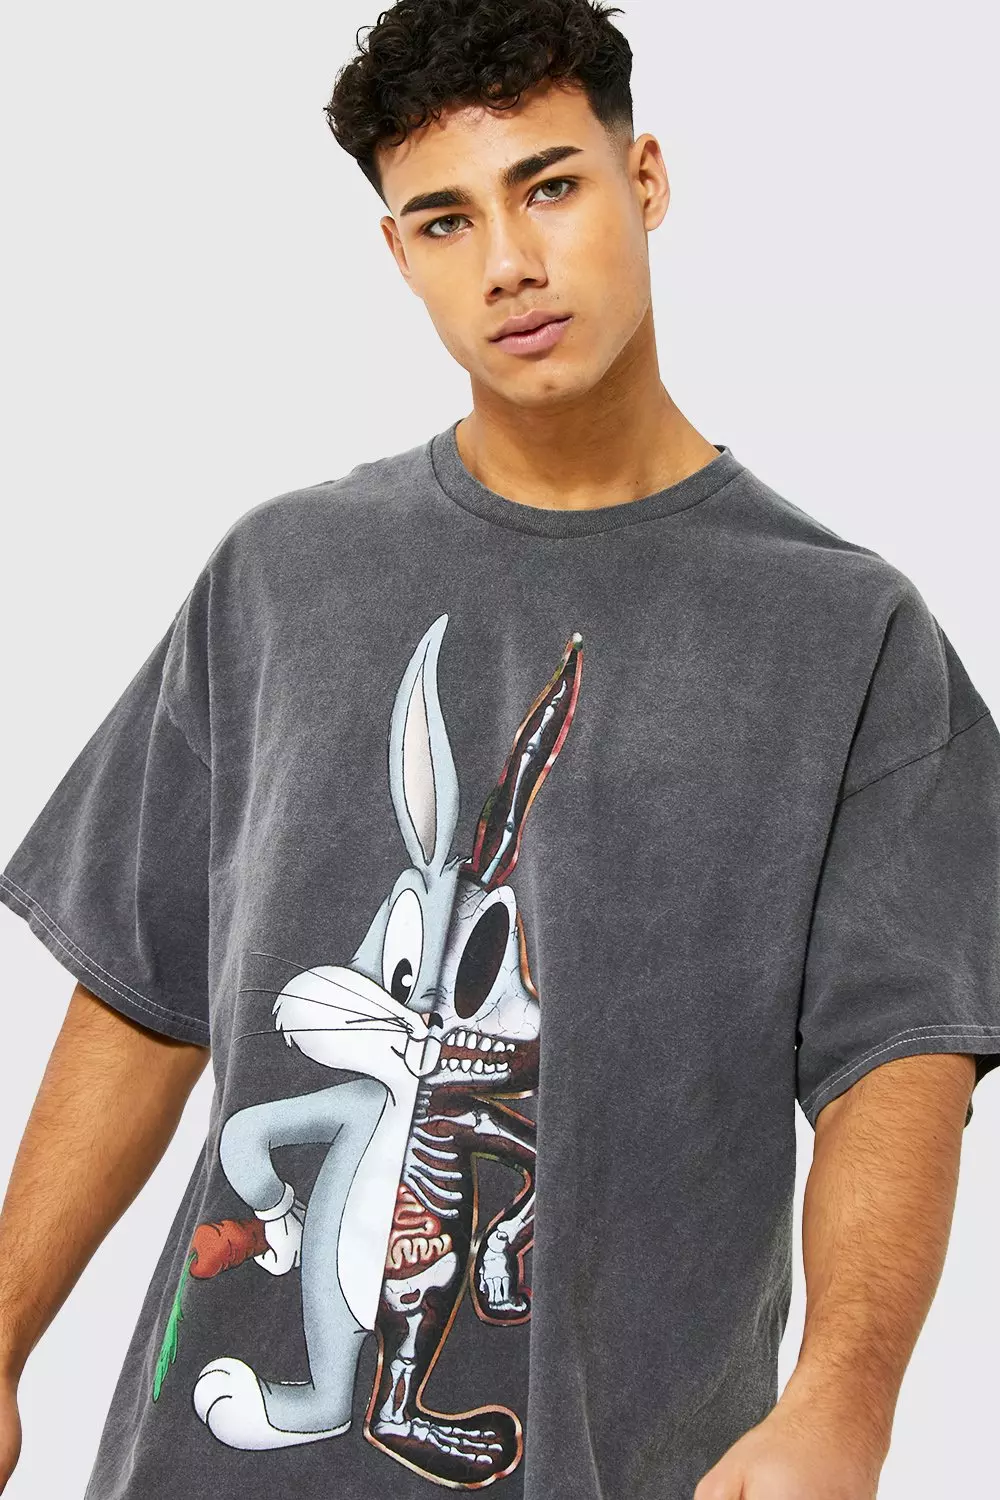 Oversized Varsity Bugs Bunny License Sweatshirt